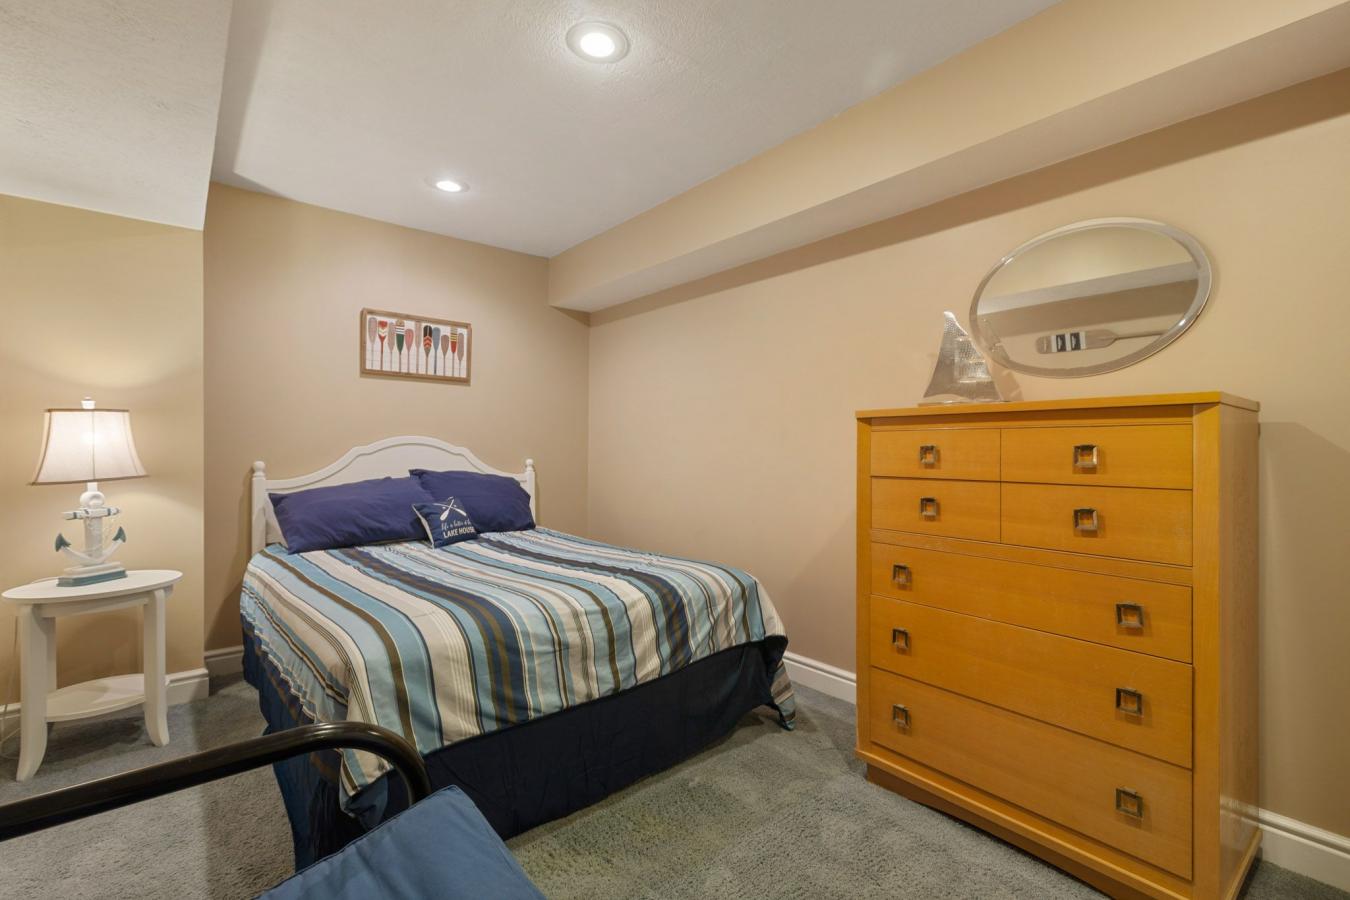 11797 pine ridge DR, Conneaut Lake, Pennsylvania, 16316, United States, 7 Bedrooms Bedrooms, ,5 BathroomsBathrooms,Residential,For Sale,11797 pine ridge DR,895813